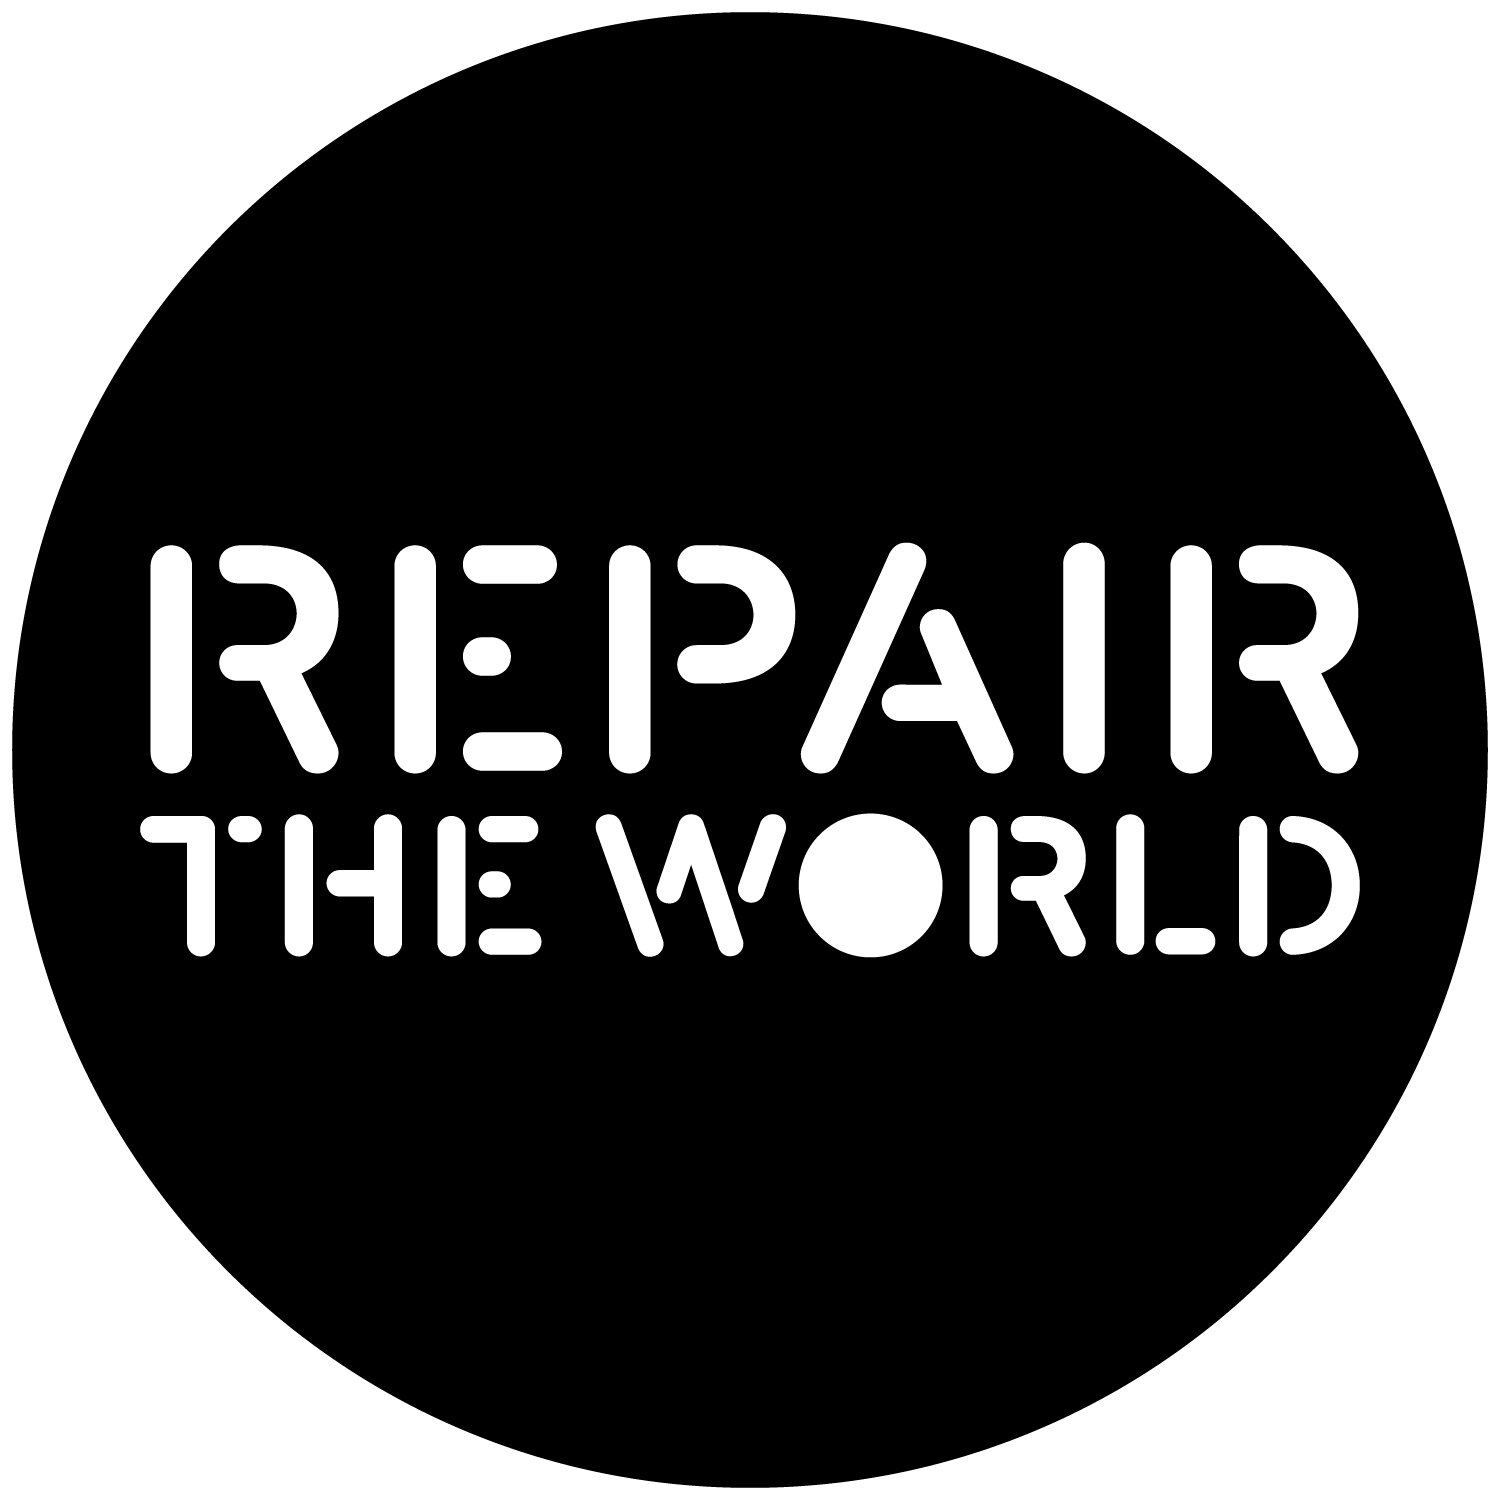 repair the world logo.jpg